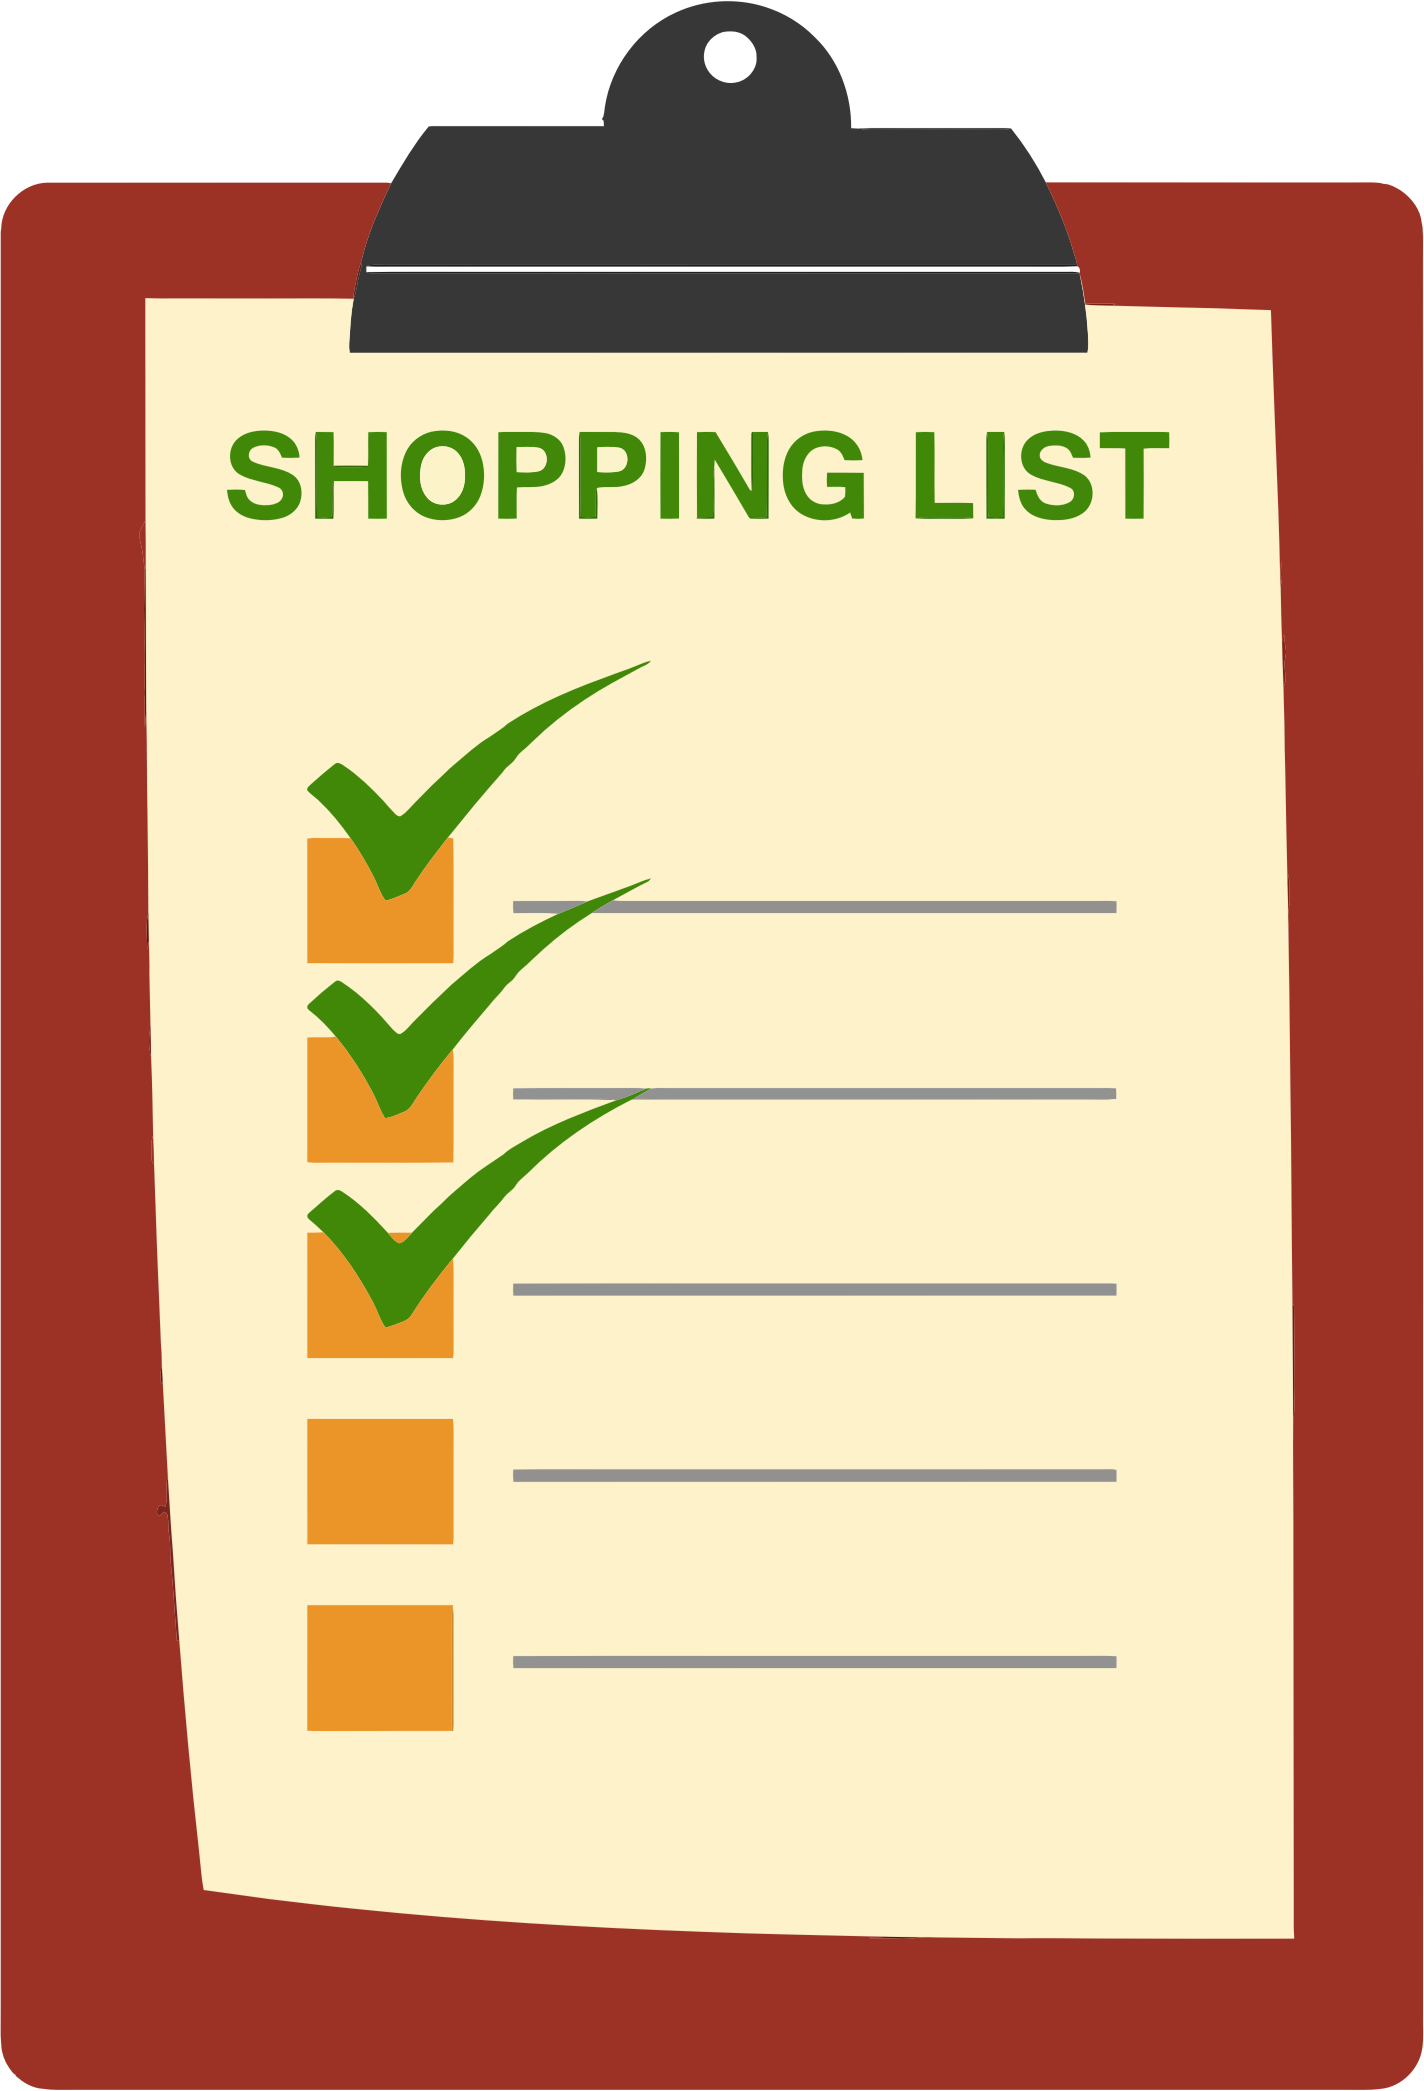 Shopping list. Список покупок. Список покупок картинка. Shopping list шаблон. My mum shopping list